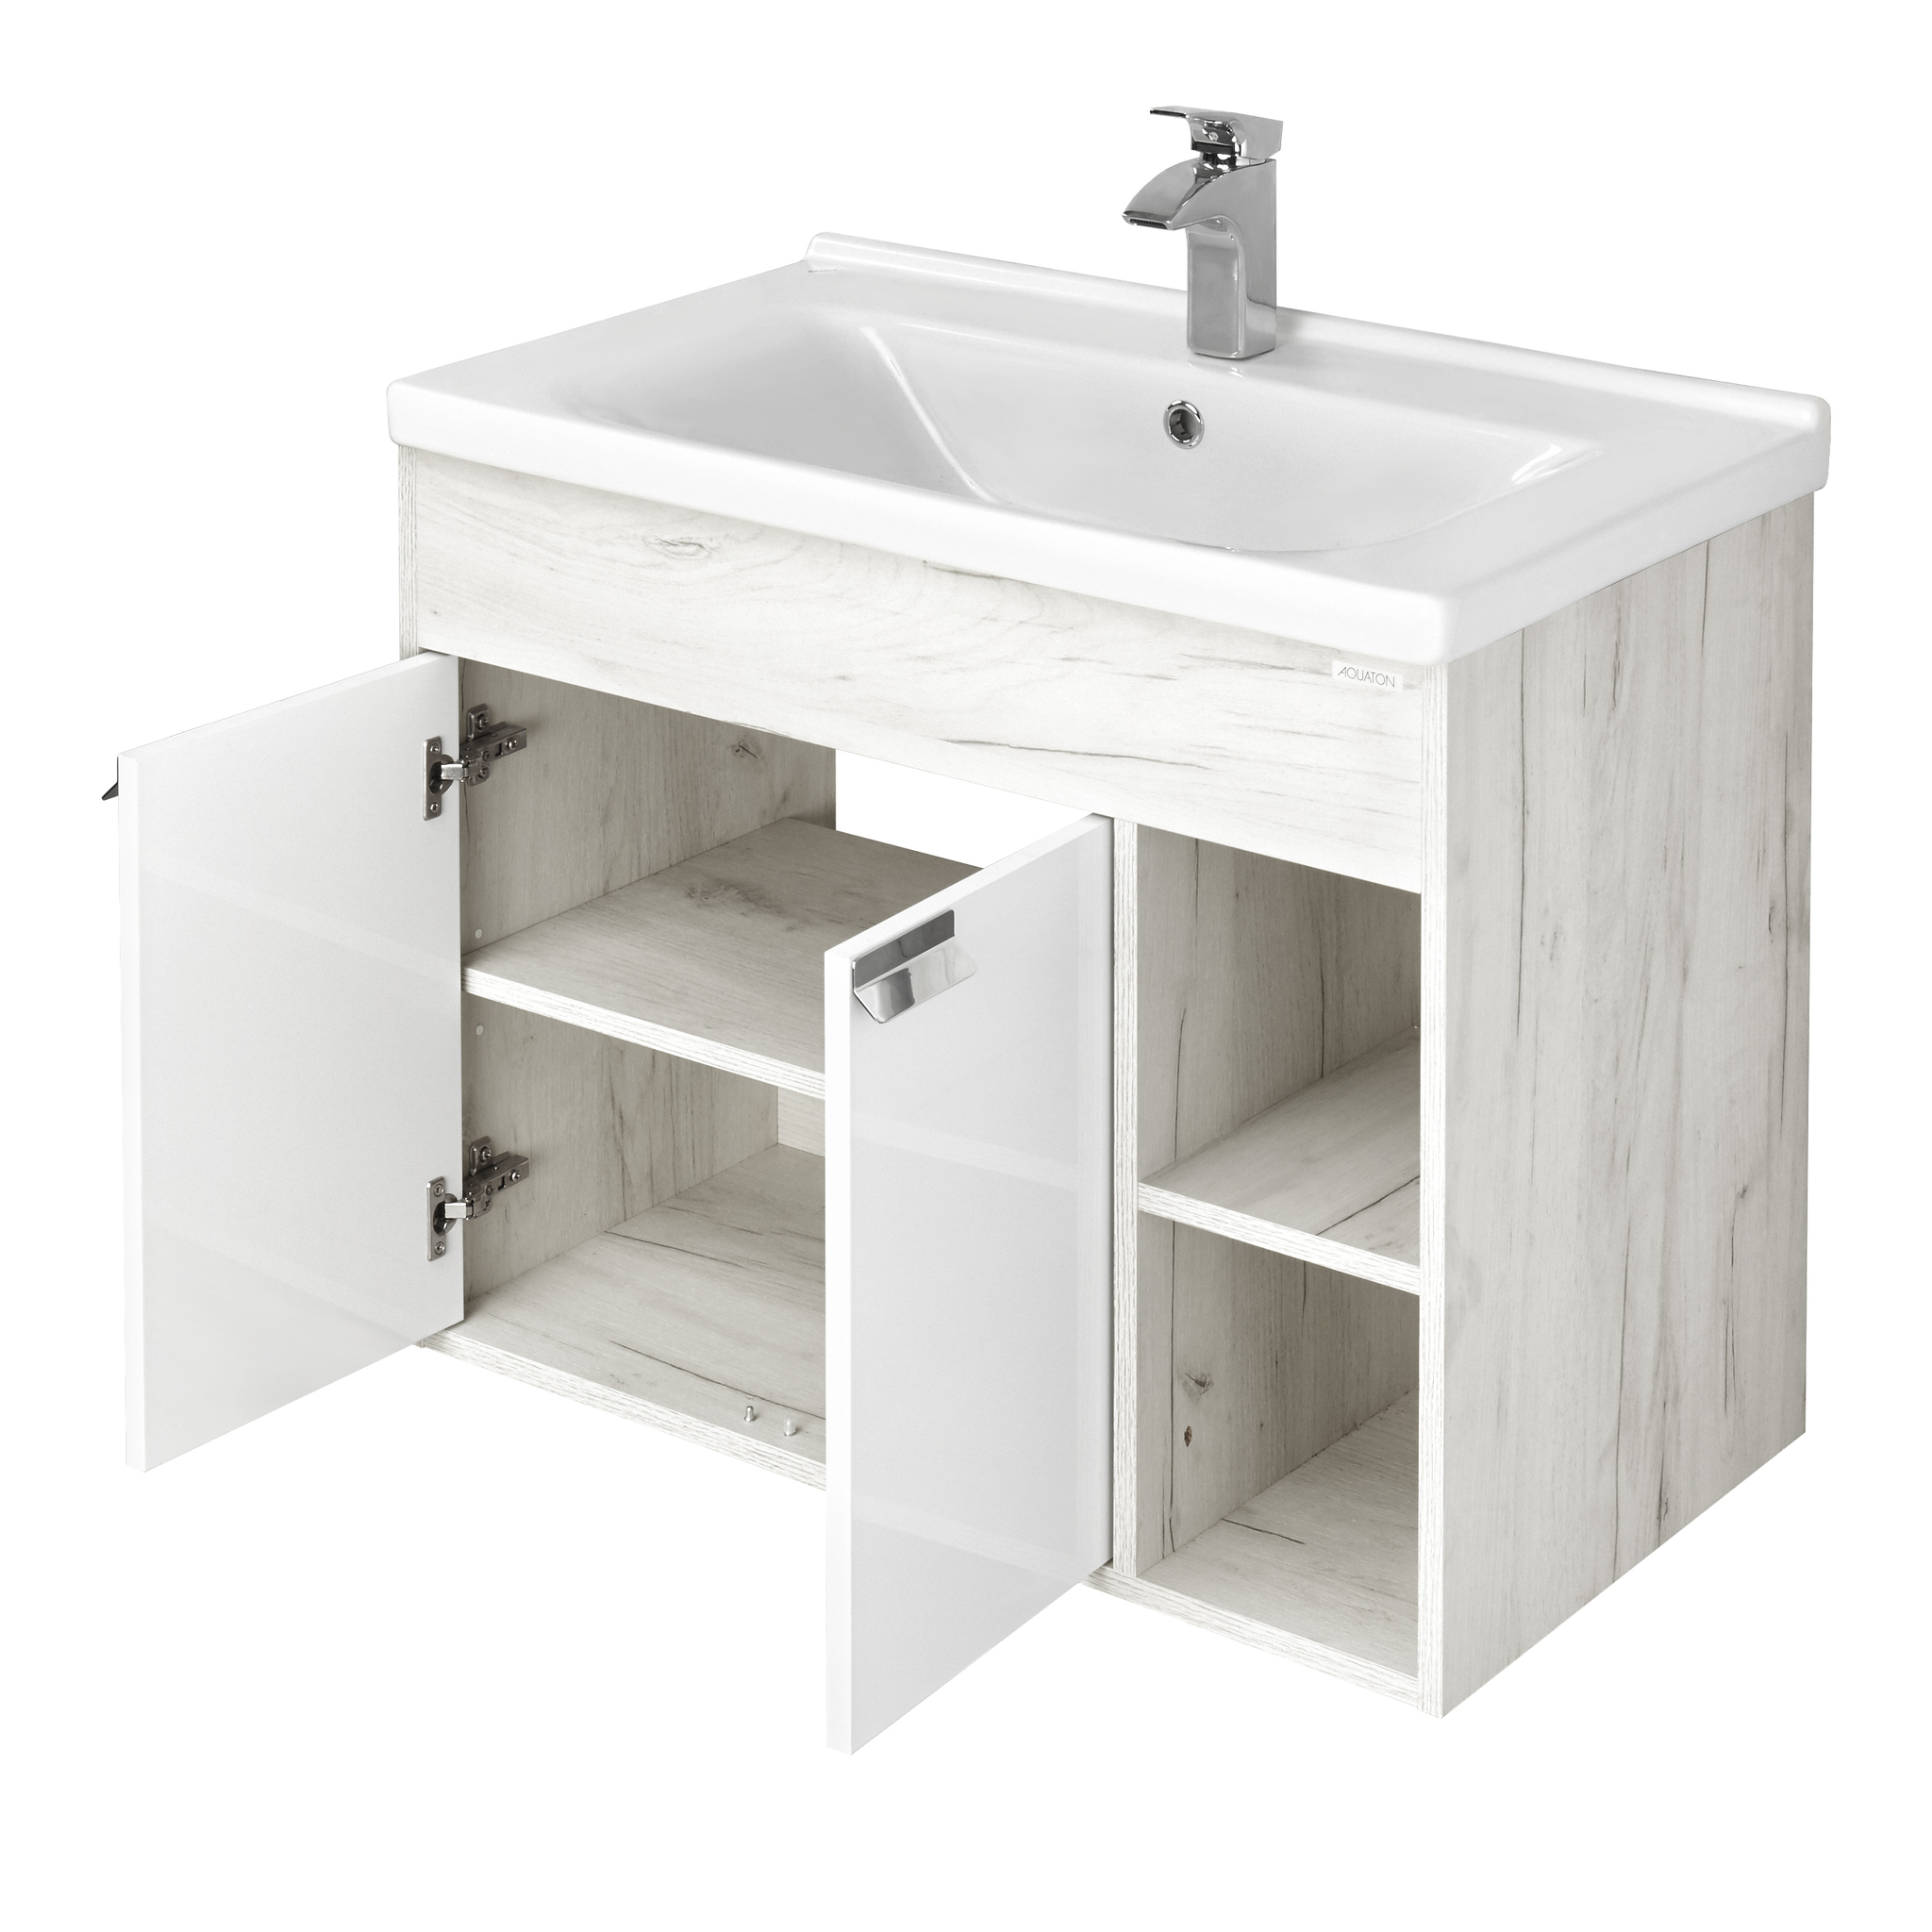 Мебель для ванной Акватон Флай 80 см белый/дуб крафт